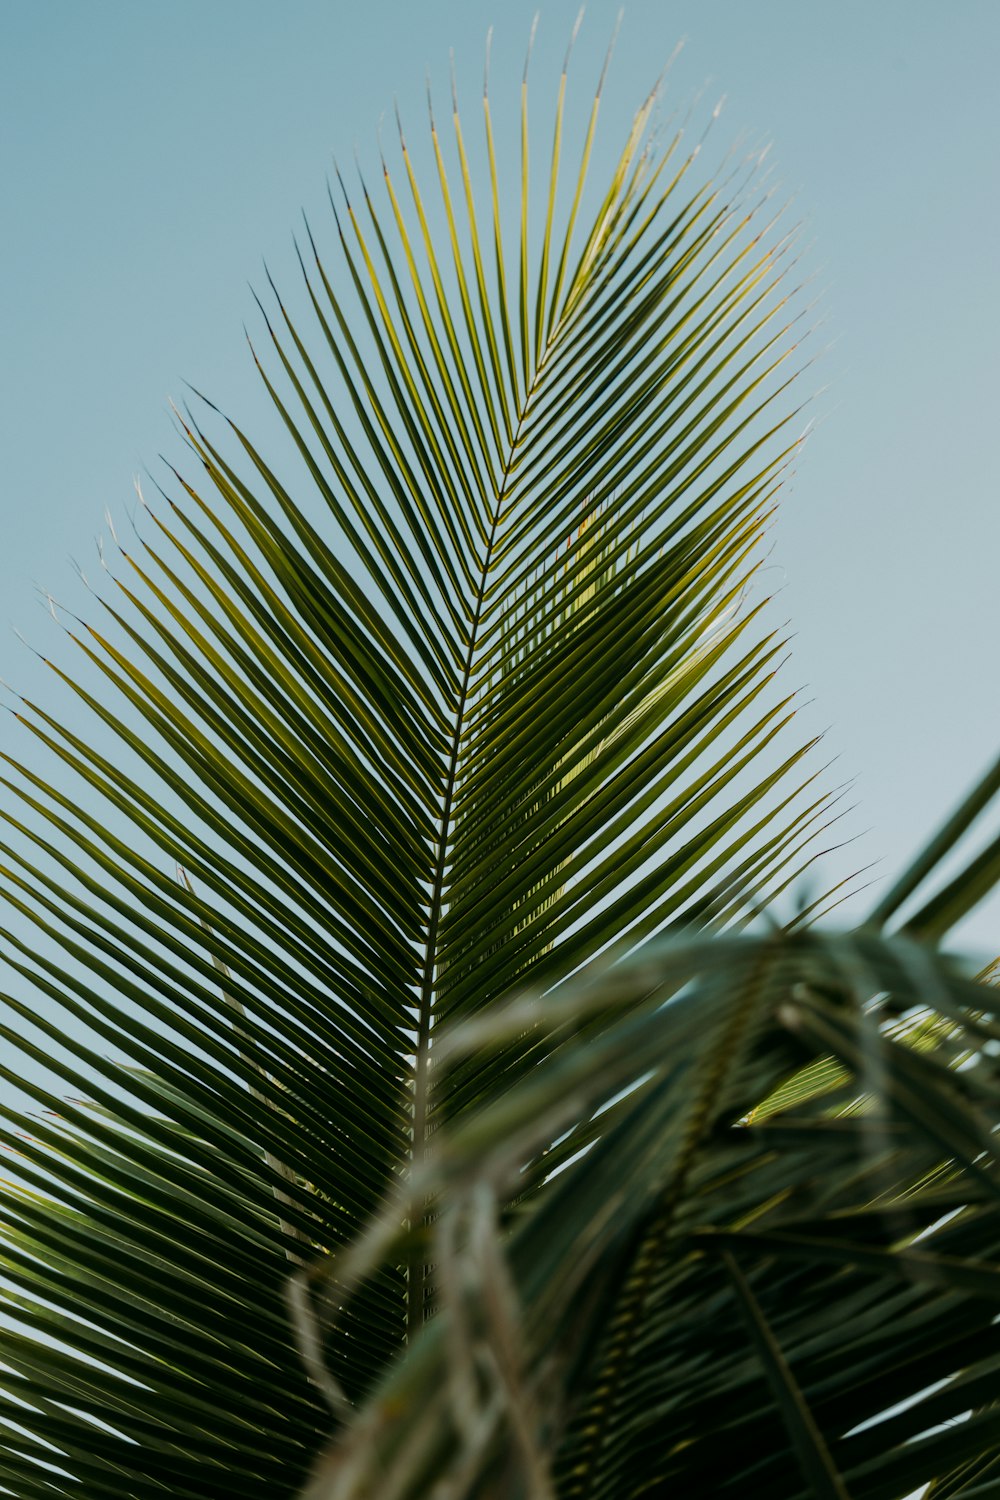 a close up of a palm leaf against a blue sky